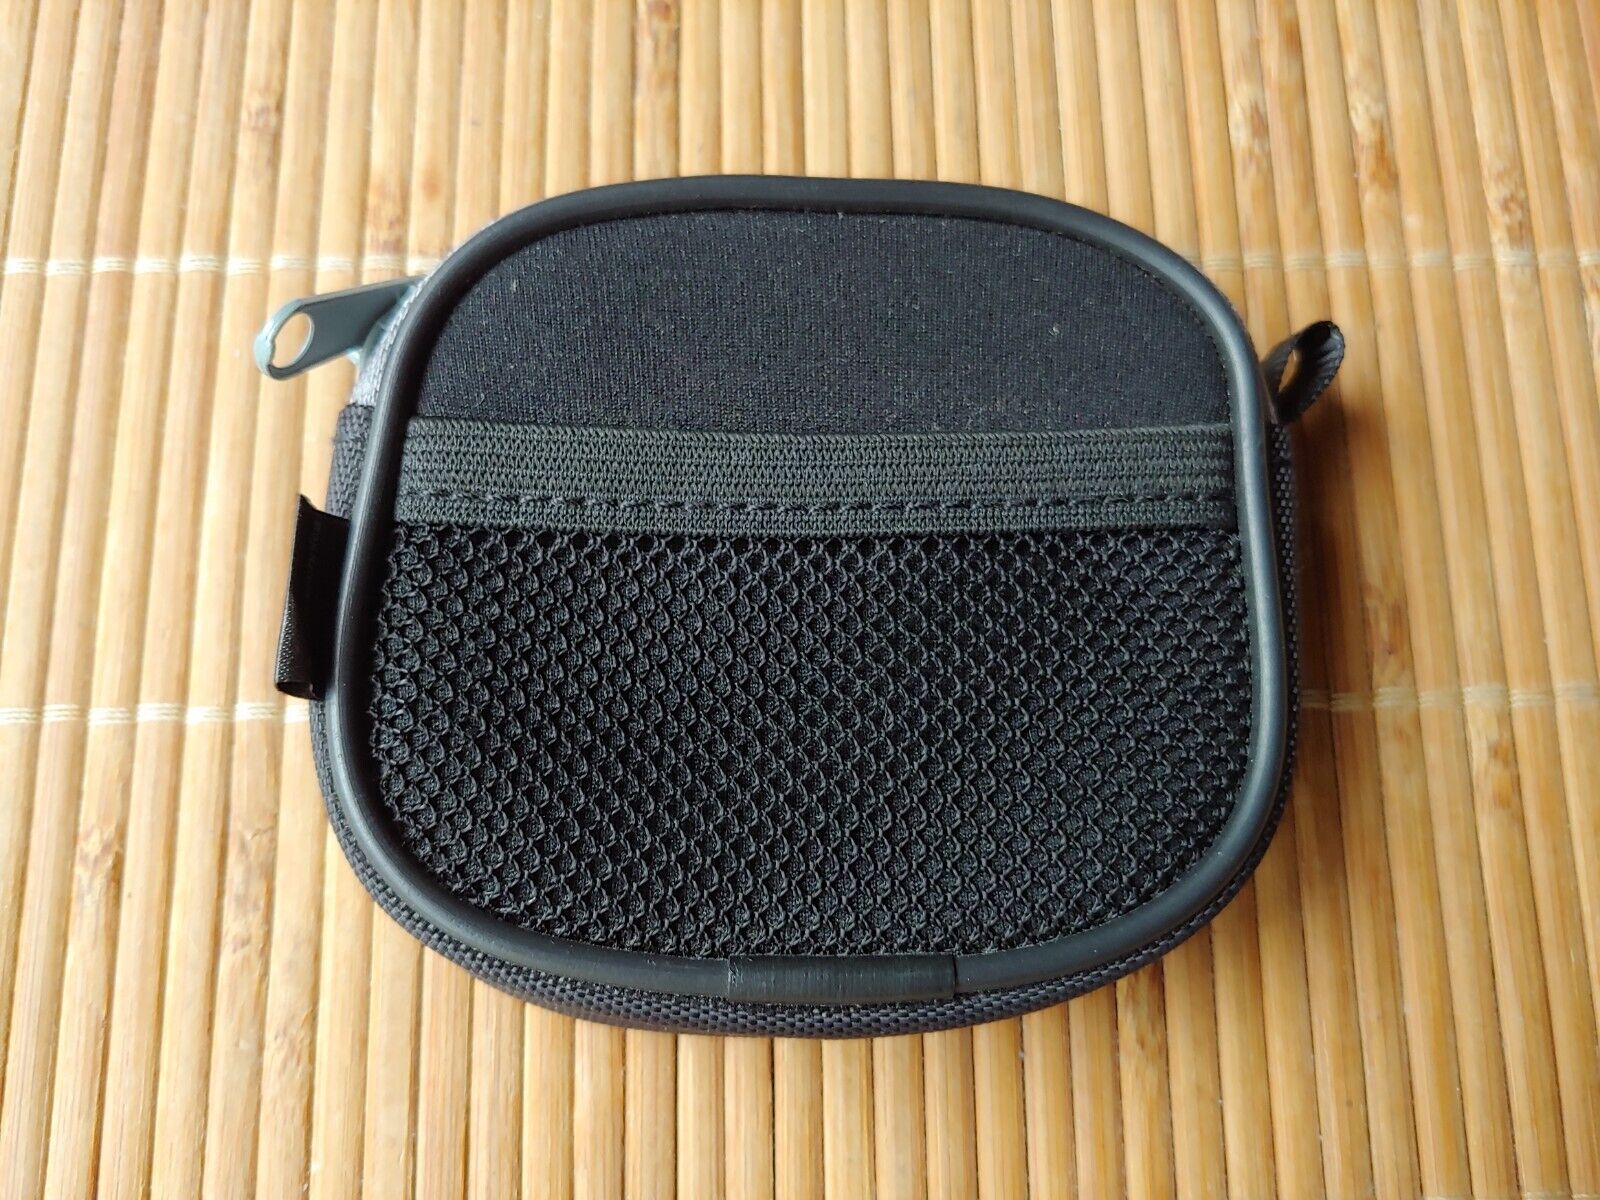 Generic Iem / Earphone Case - Soft Shell Nylon Black Zipper Case